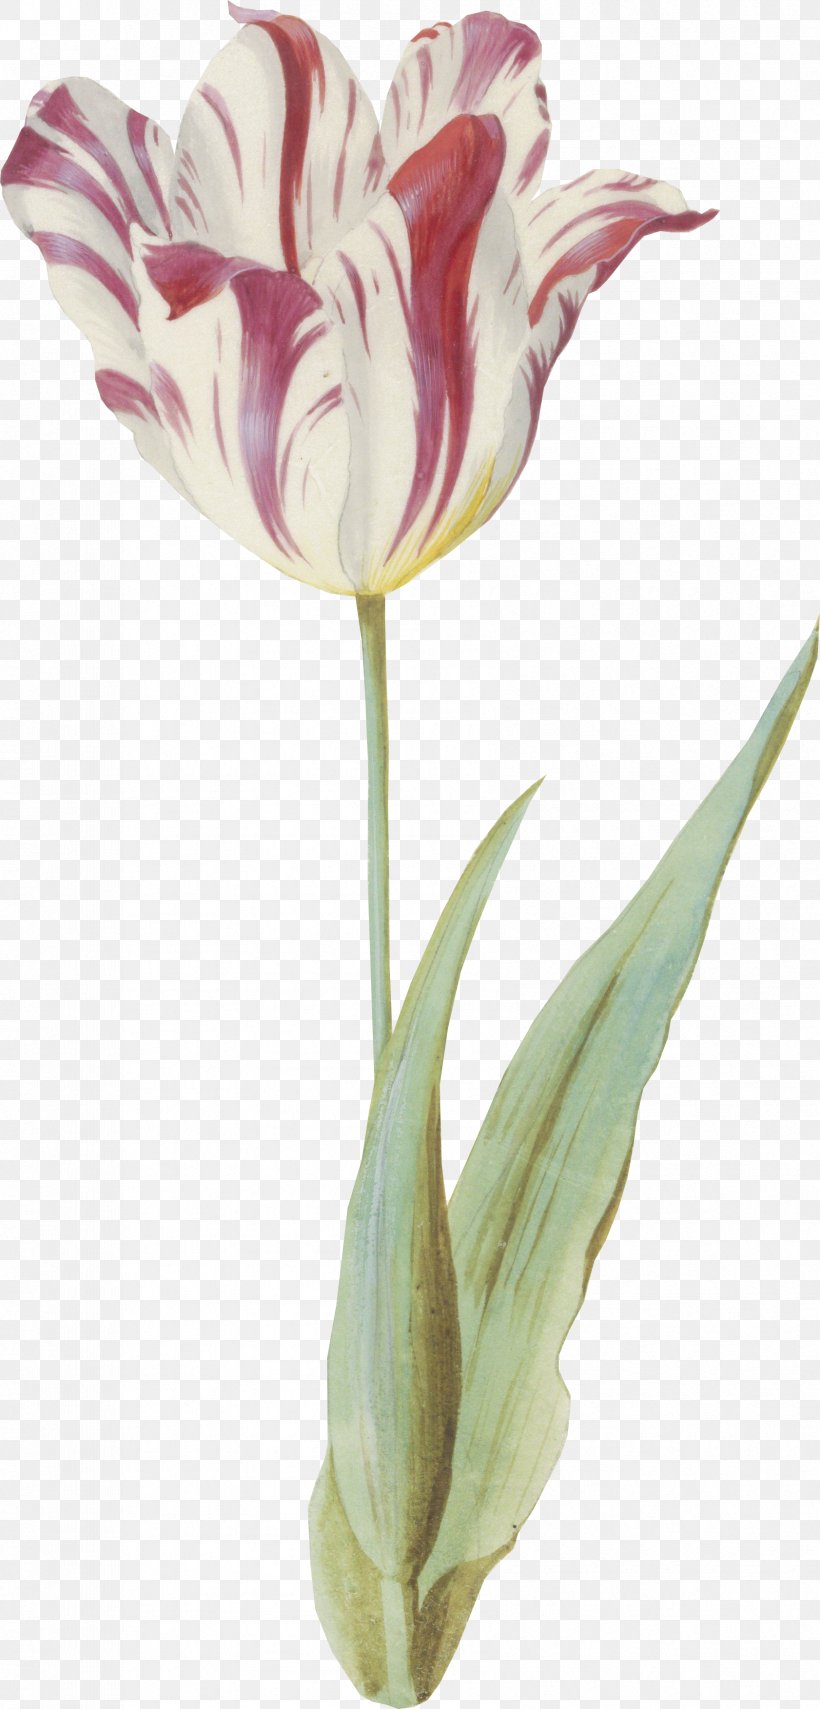 Tulip Cut Flowers Vase Plant Stem Petal, PNG, 1682x3506px, Tulip, Cut Flowers, Flower, Flowering Plant, Lily Family Download Free